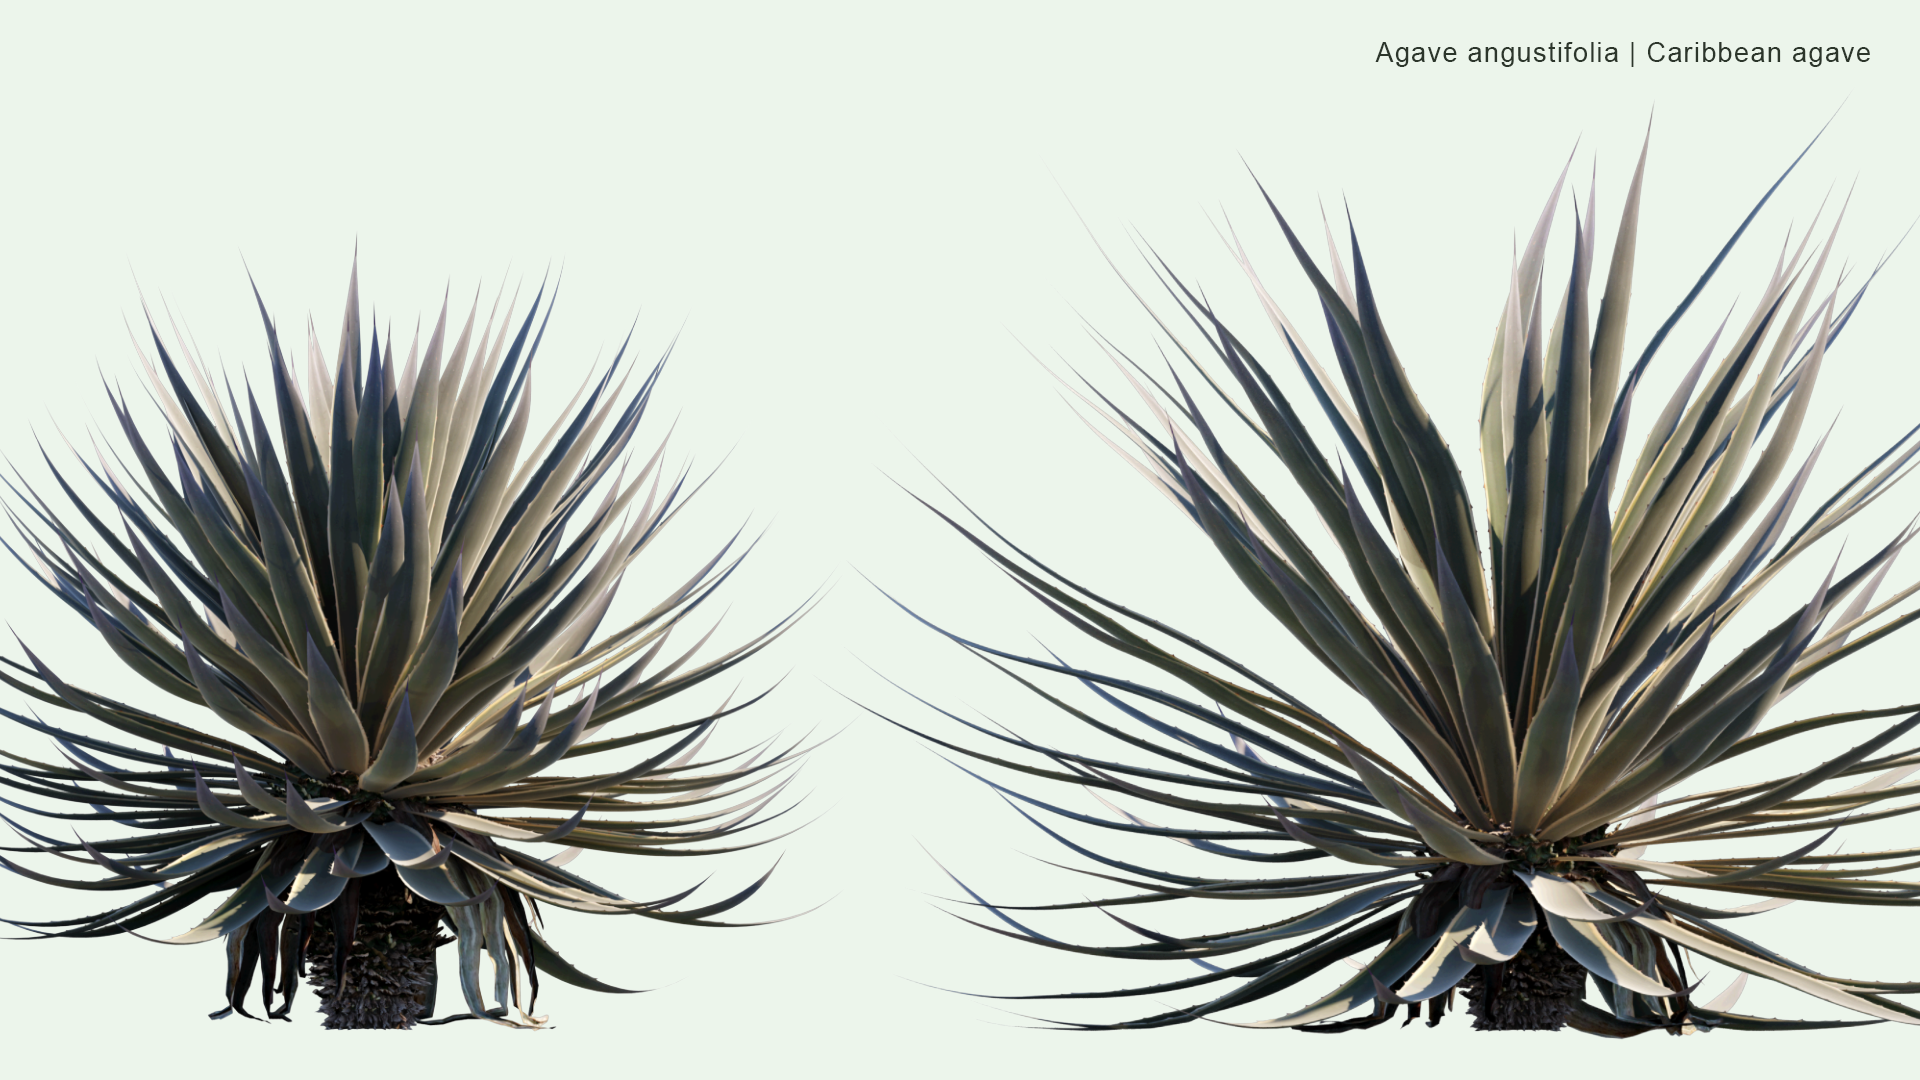 2D Agave Angustifolia - Caribbean Agave